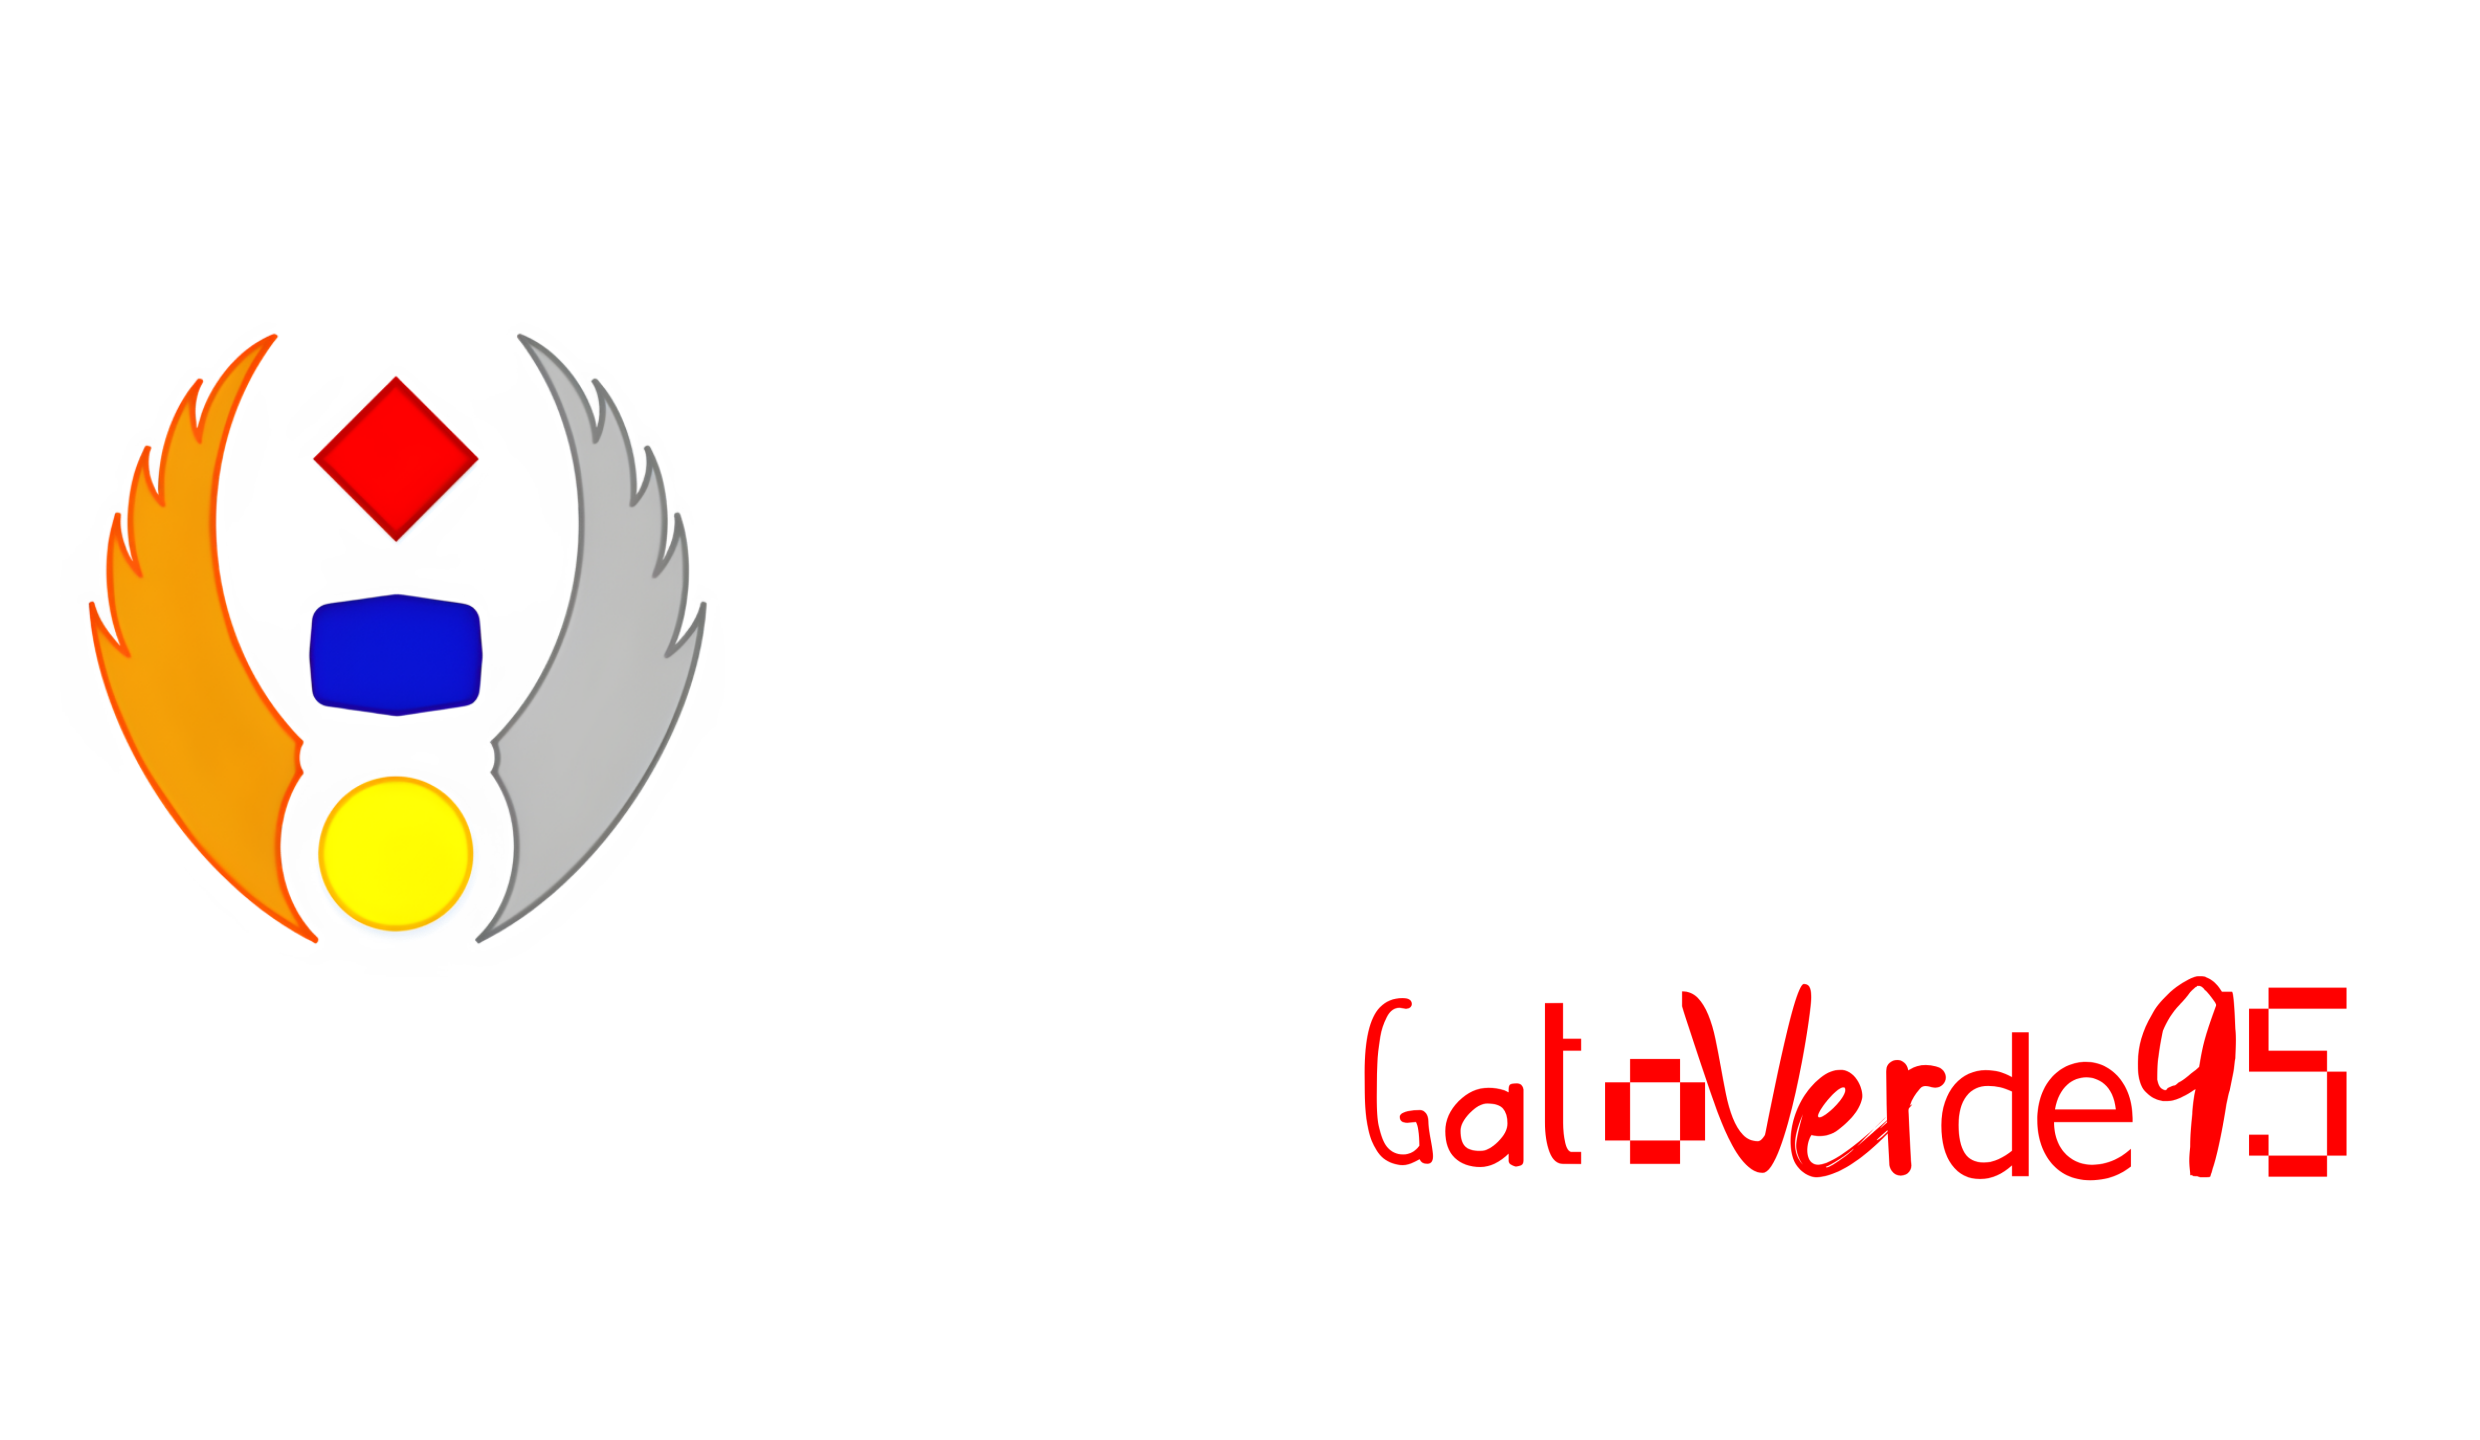 The PhoenixEmuProject Translation